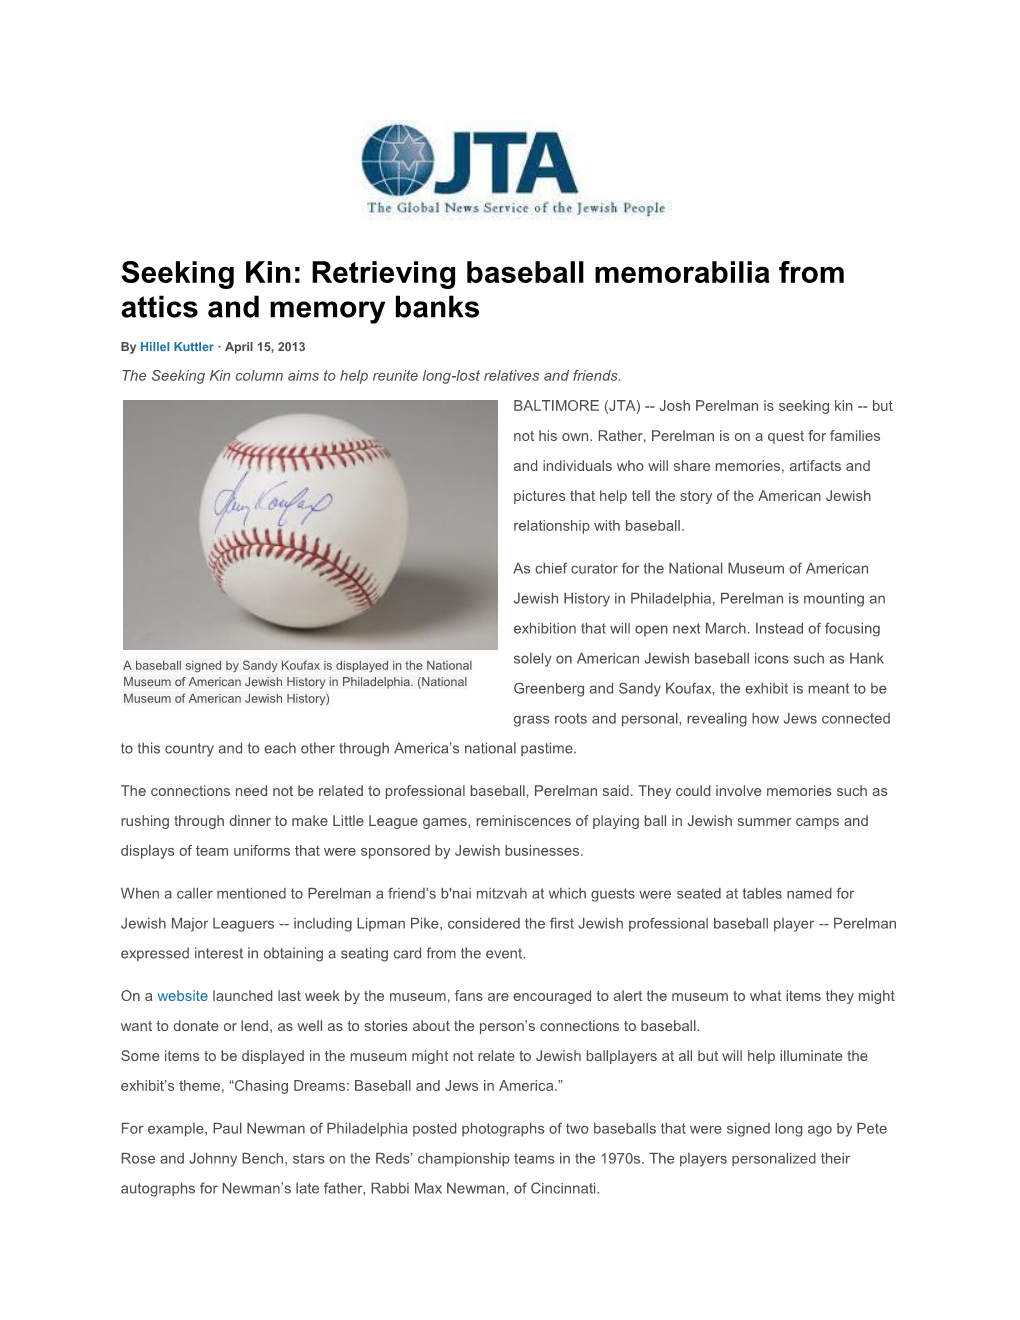 Retrieving Baseball Memorabilia from Attics and Memory Banks